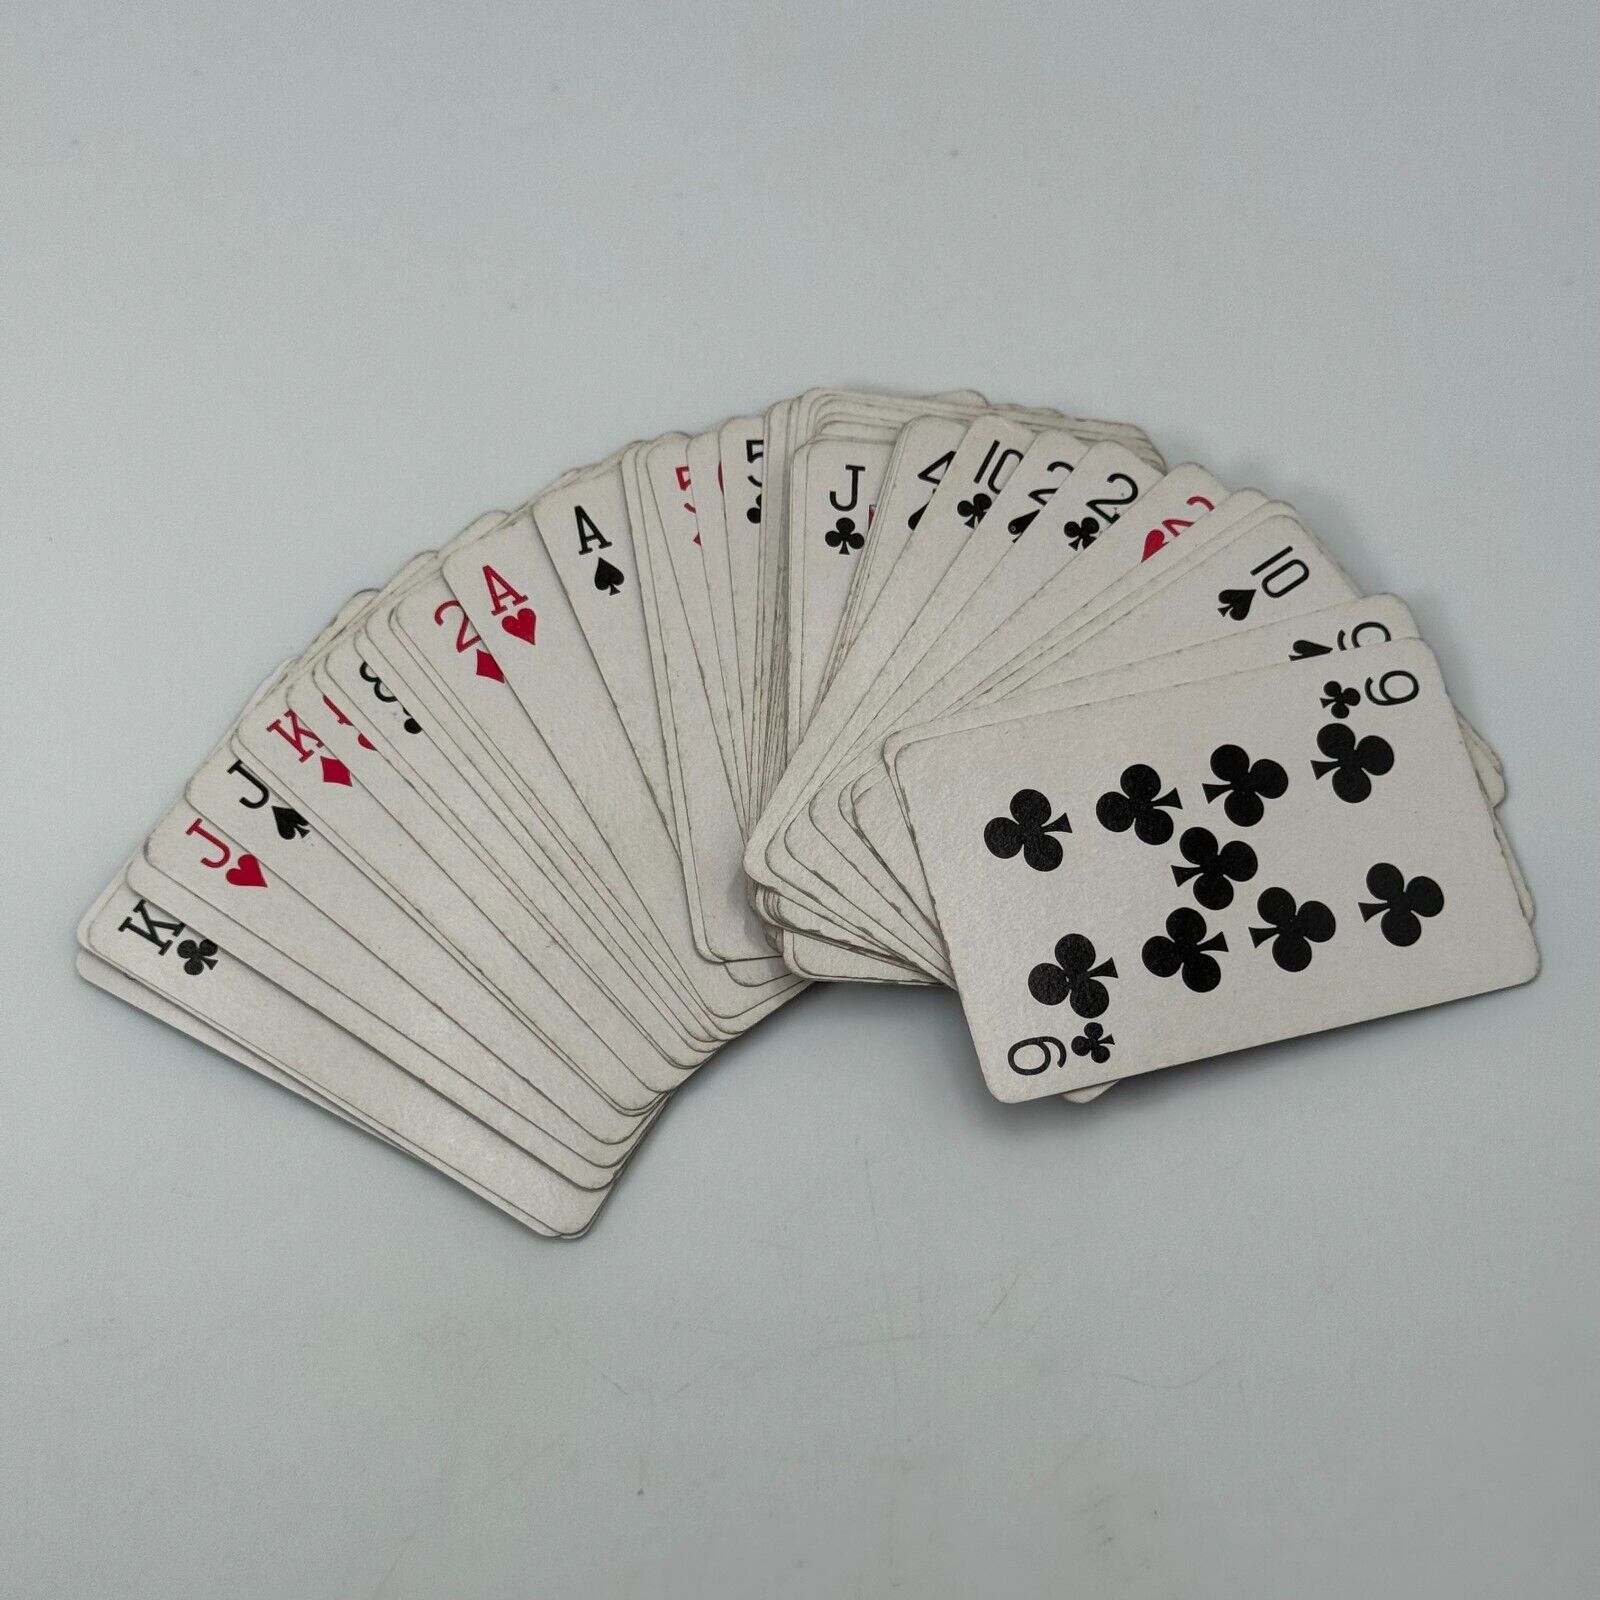 Vintage Poker Set Plastic Chips Cards Custom Decks Family Friendly Games Fun